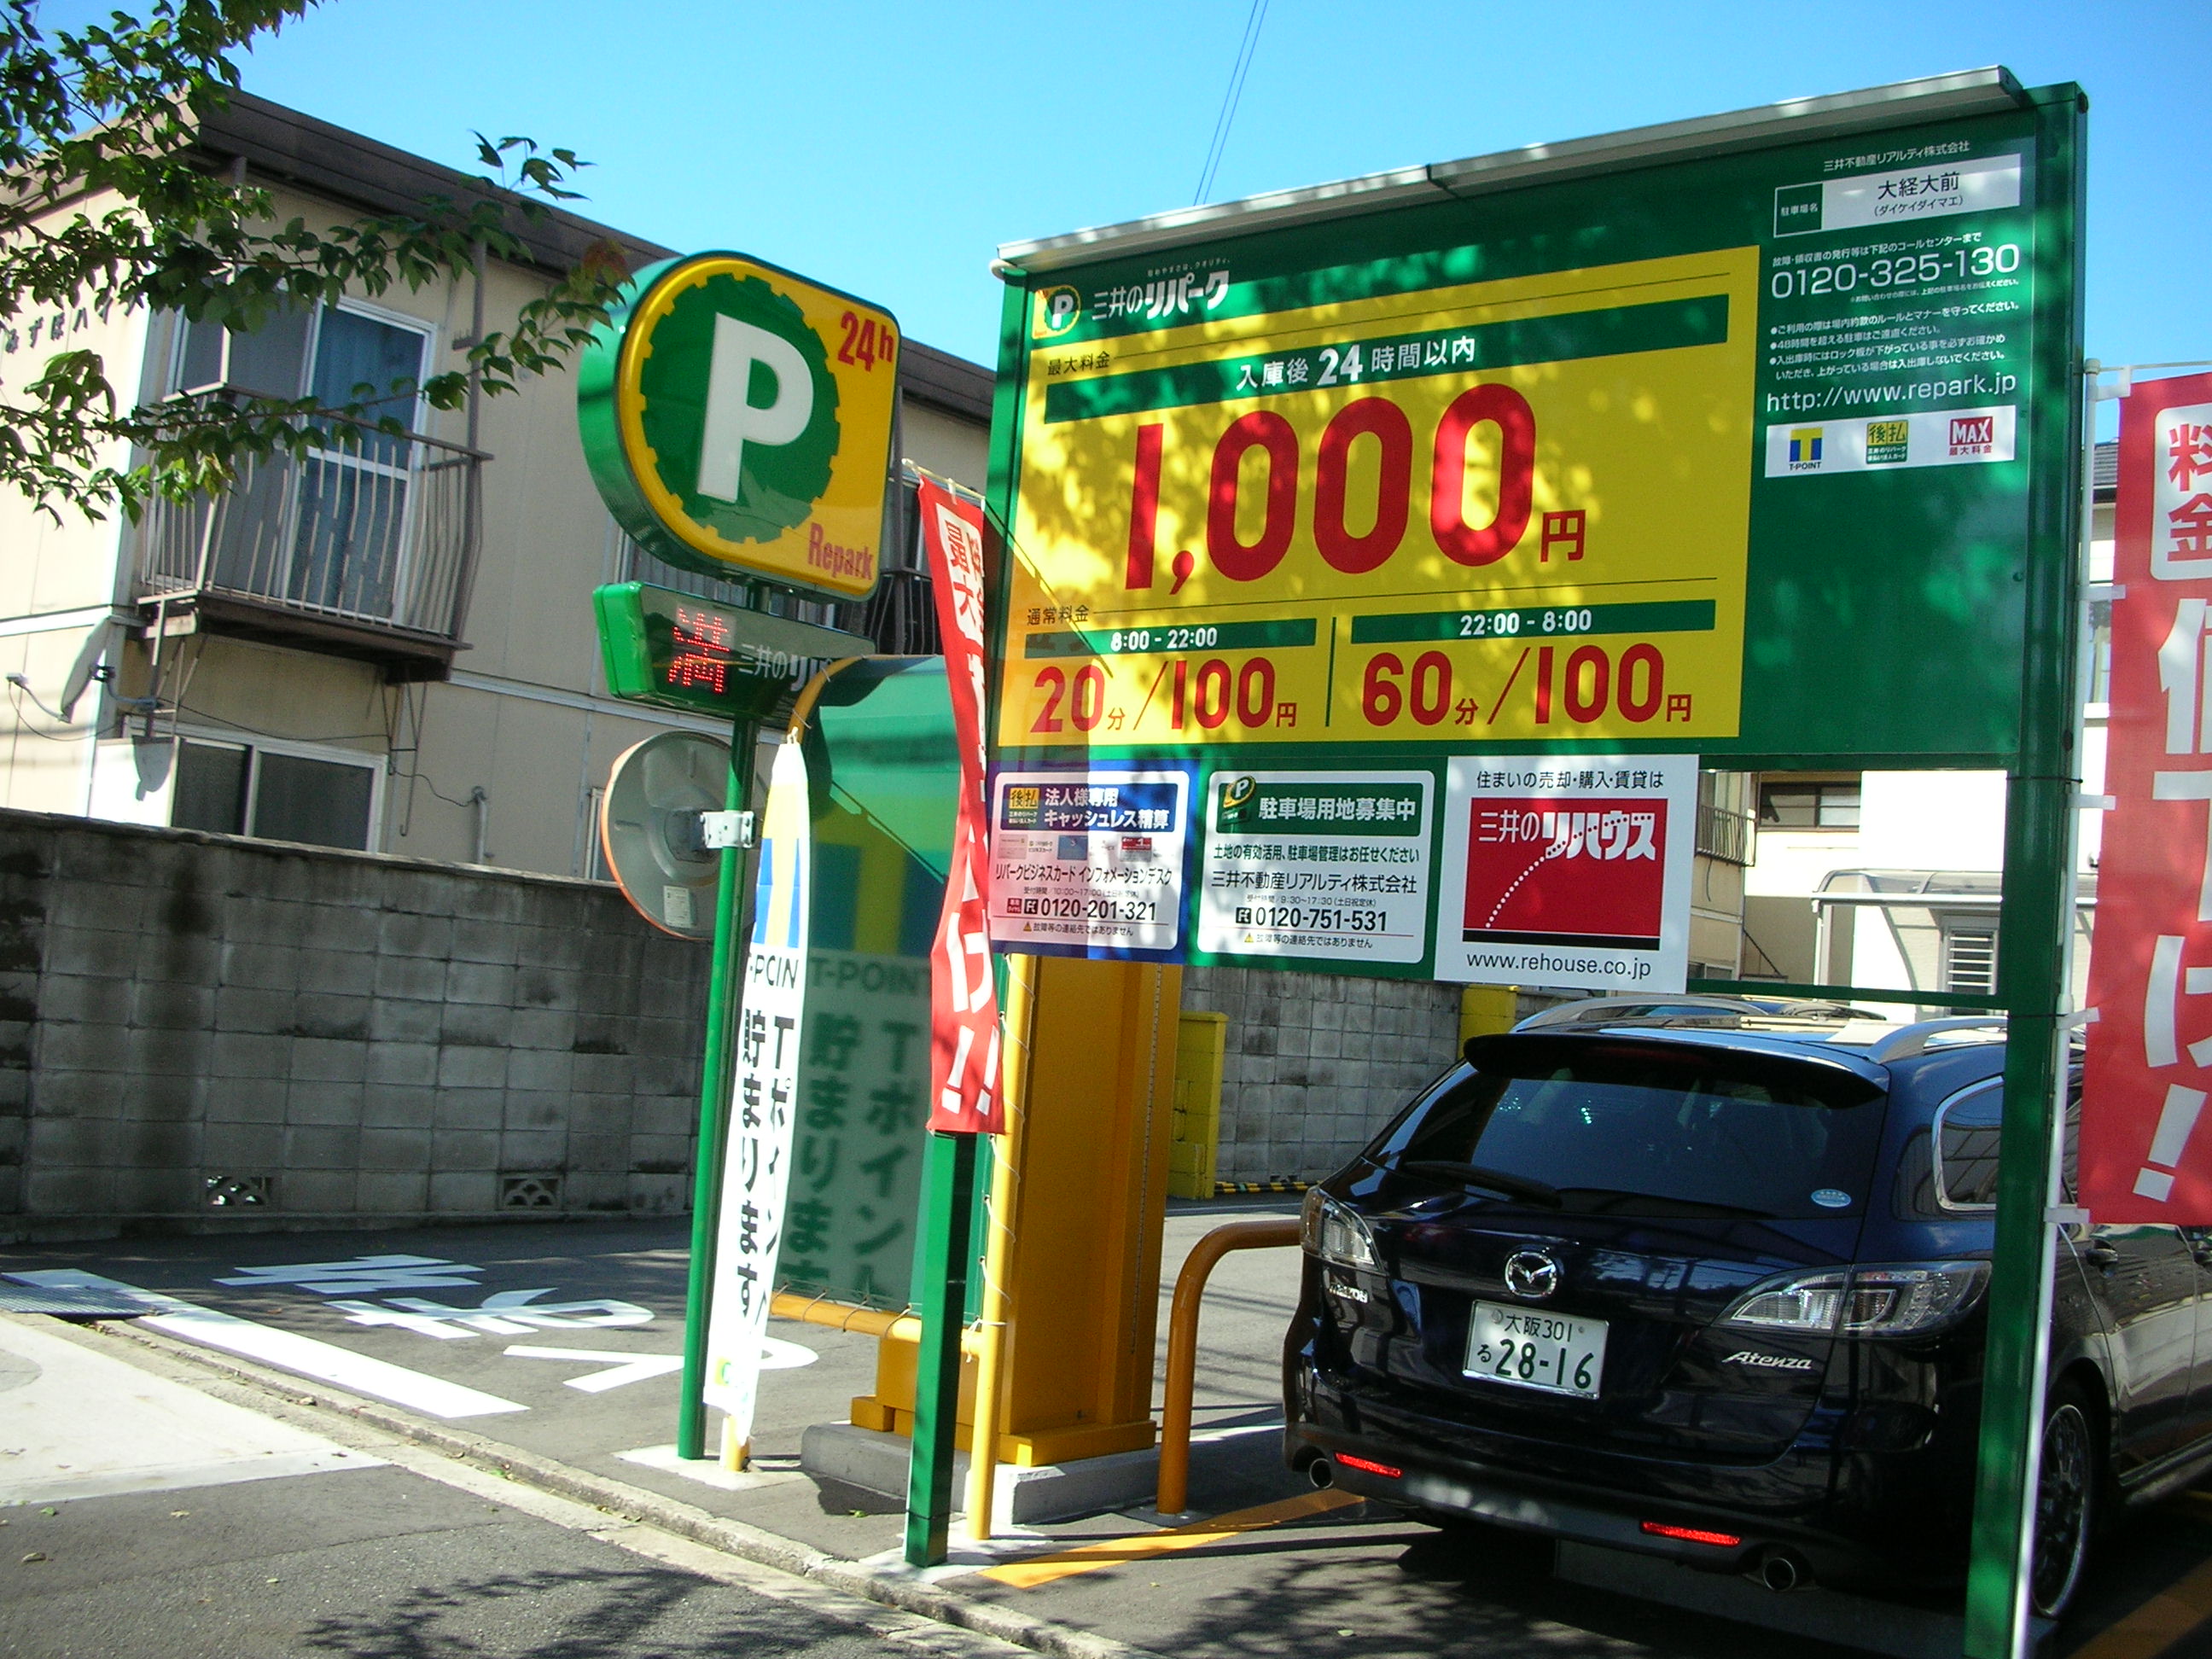 Convenience store. 185m until Lawson Zuiko Corporation store (convenience store)